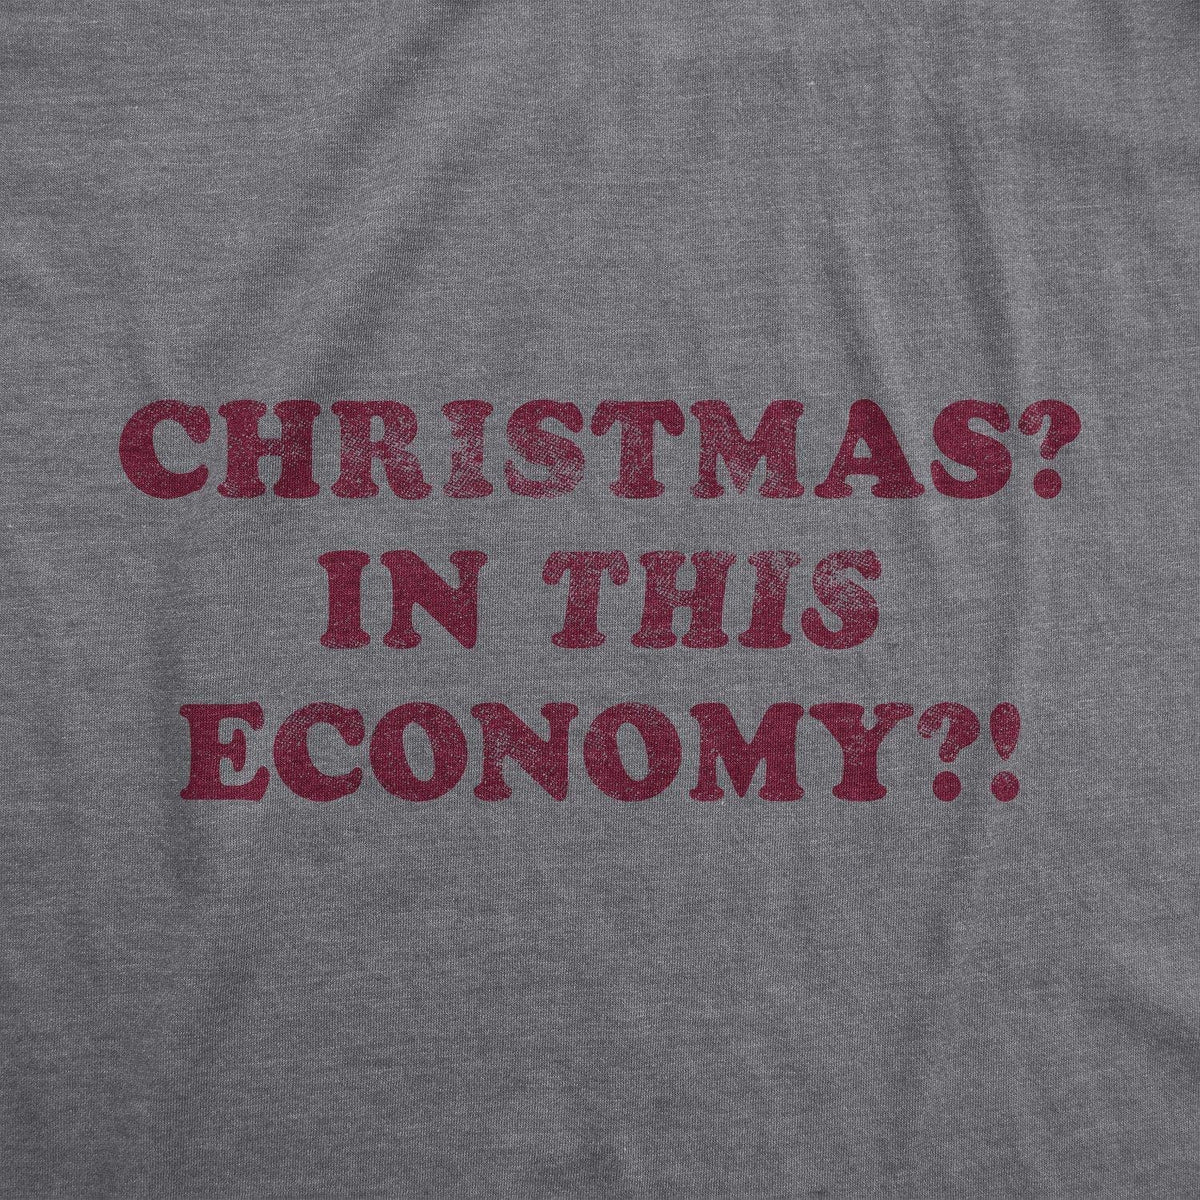 Christmas? In This Economy? Men&#39;s Tshirt - Crazy Dog T-Shirts